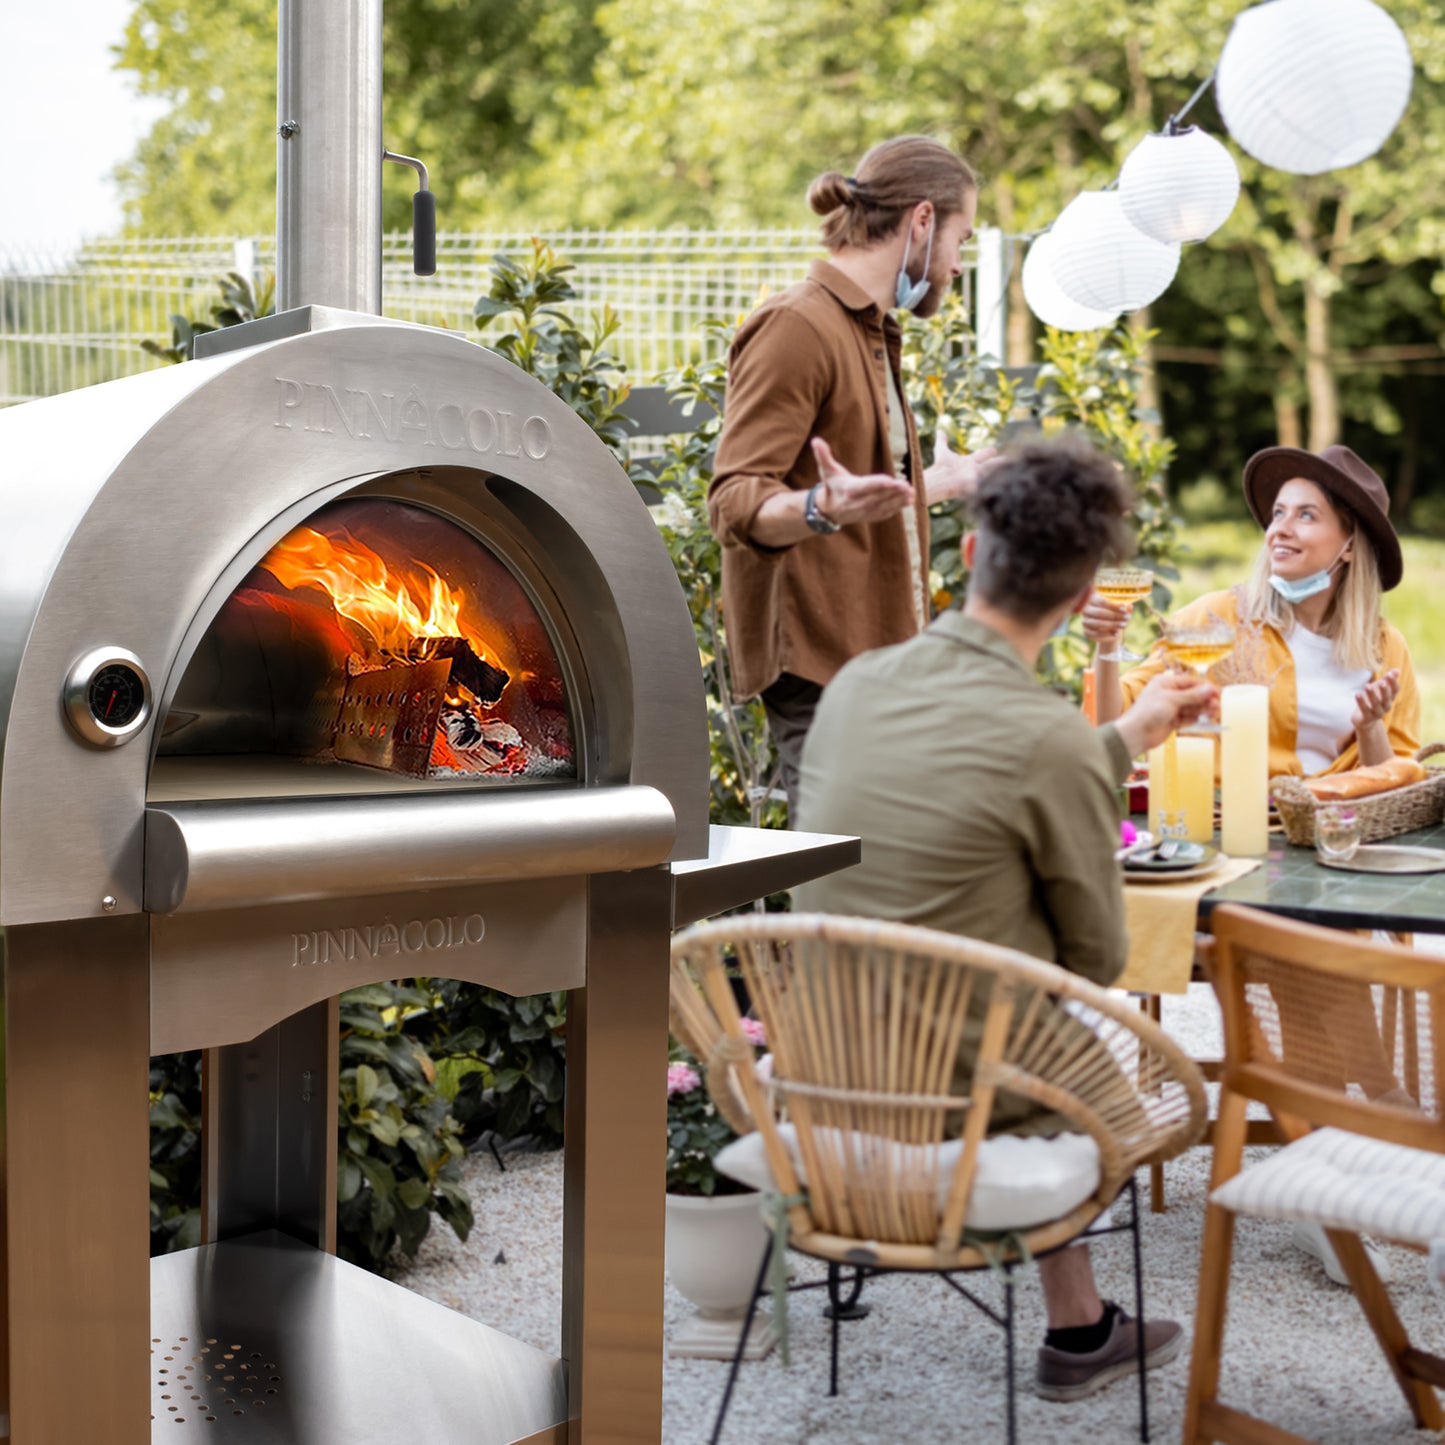 Pinnacolo Premio Wood Fired Outdoor Pizza Oven - FREE Accessories